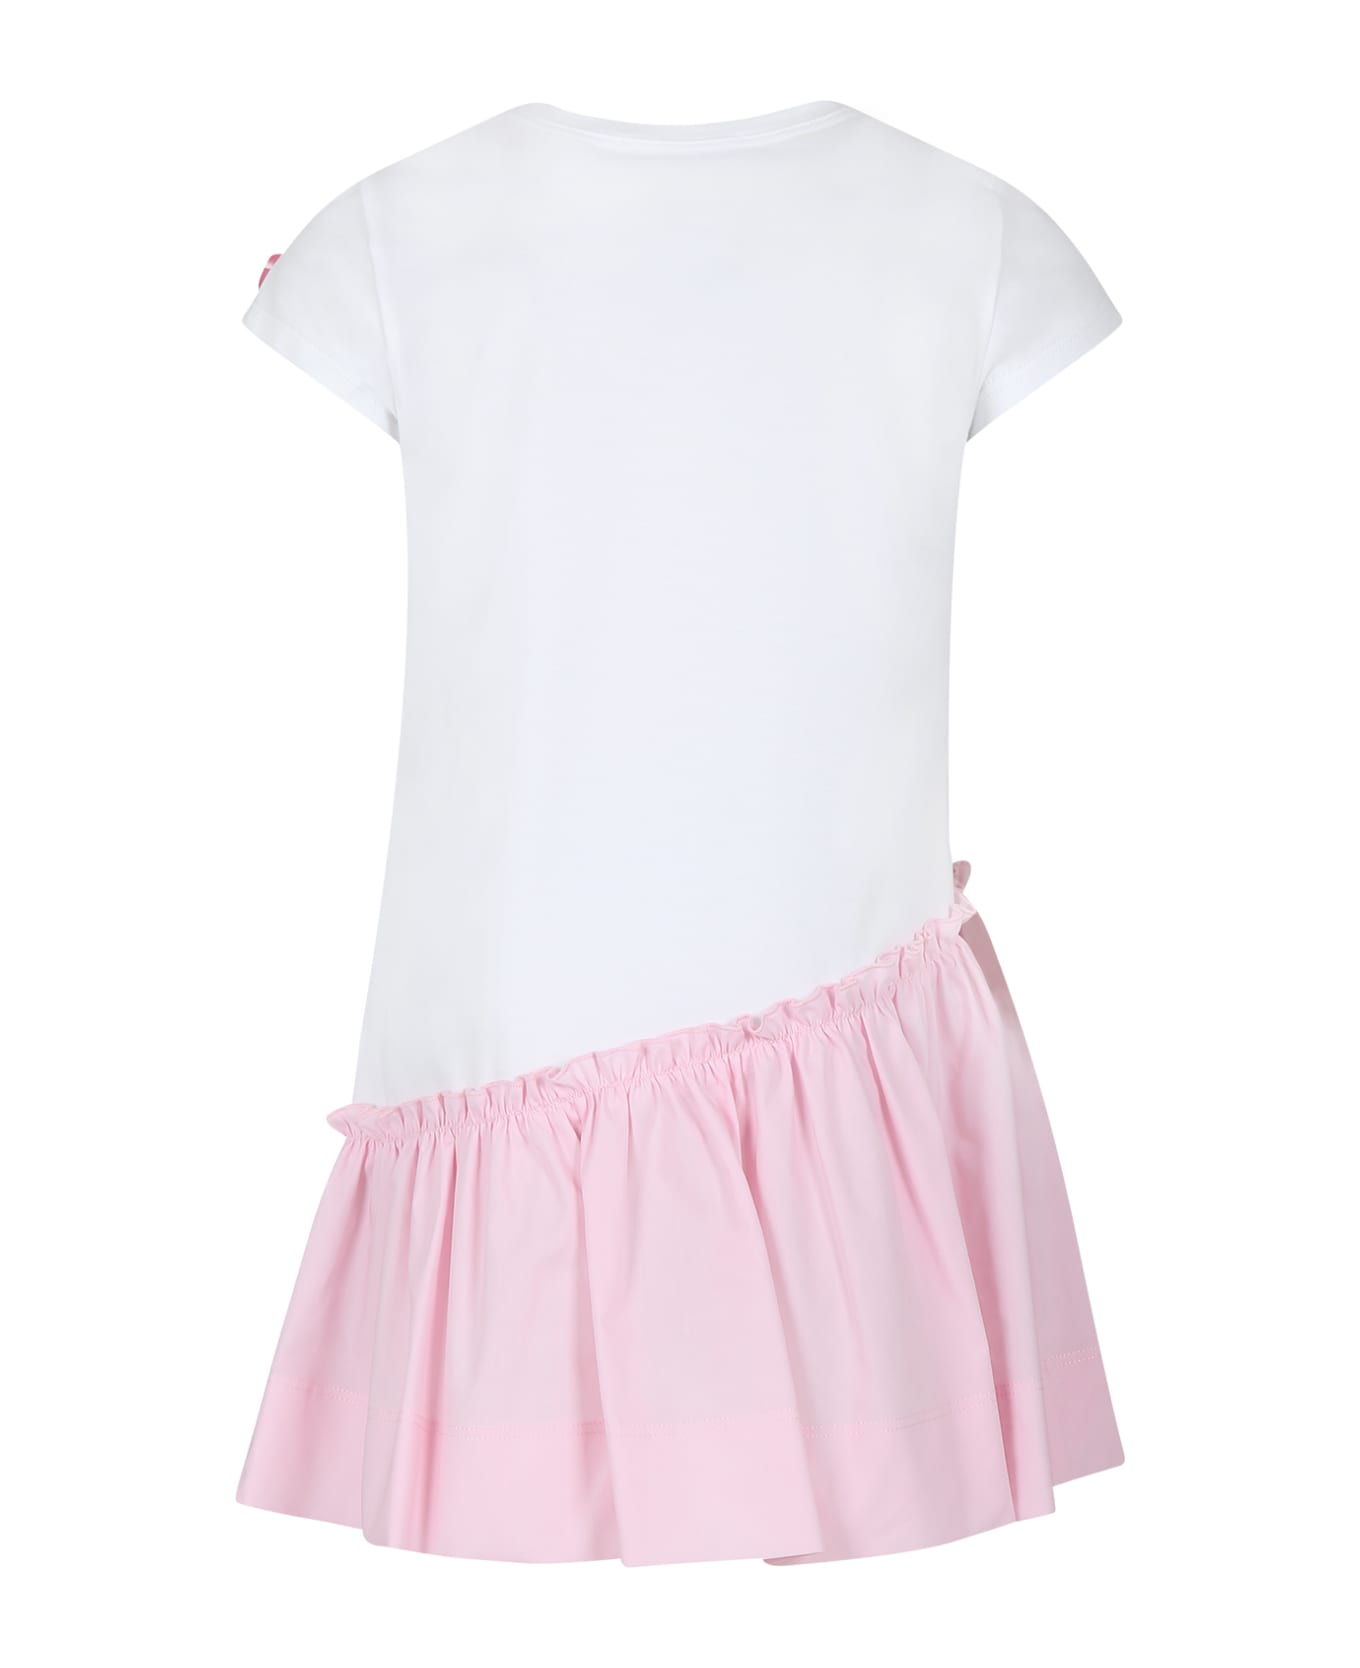 Monnalisa White Dress For Girl With Minnie Print - White